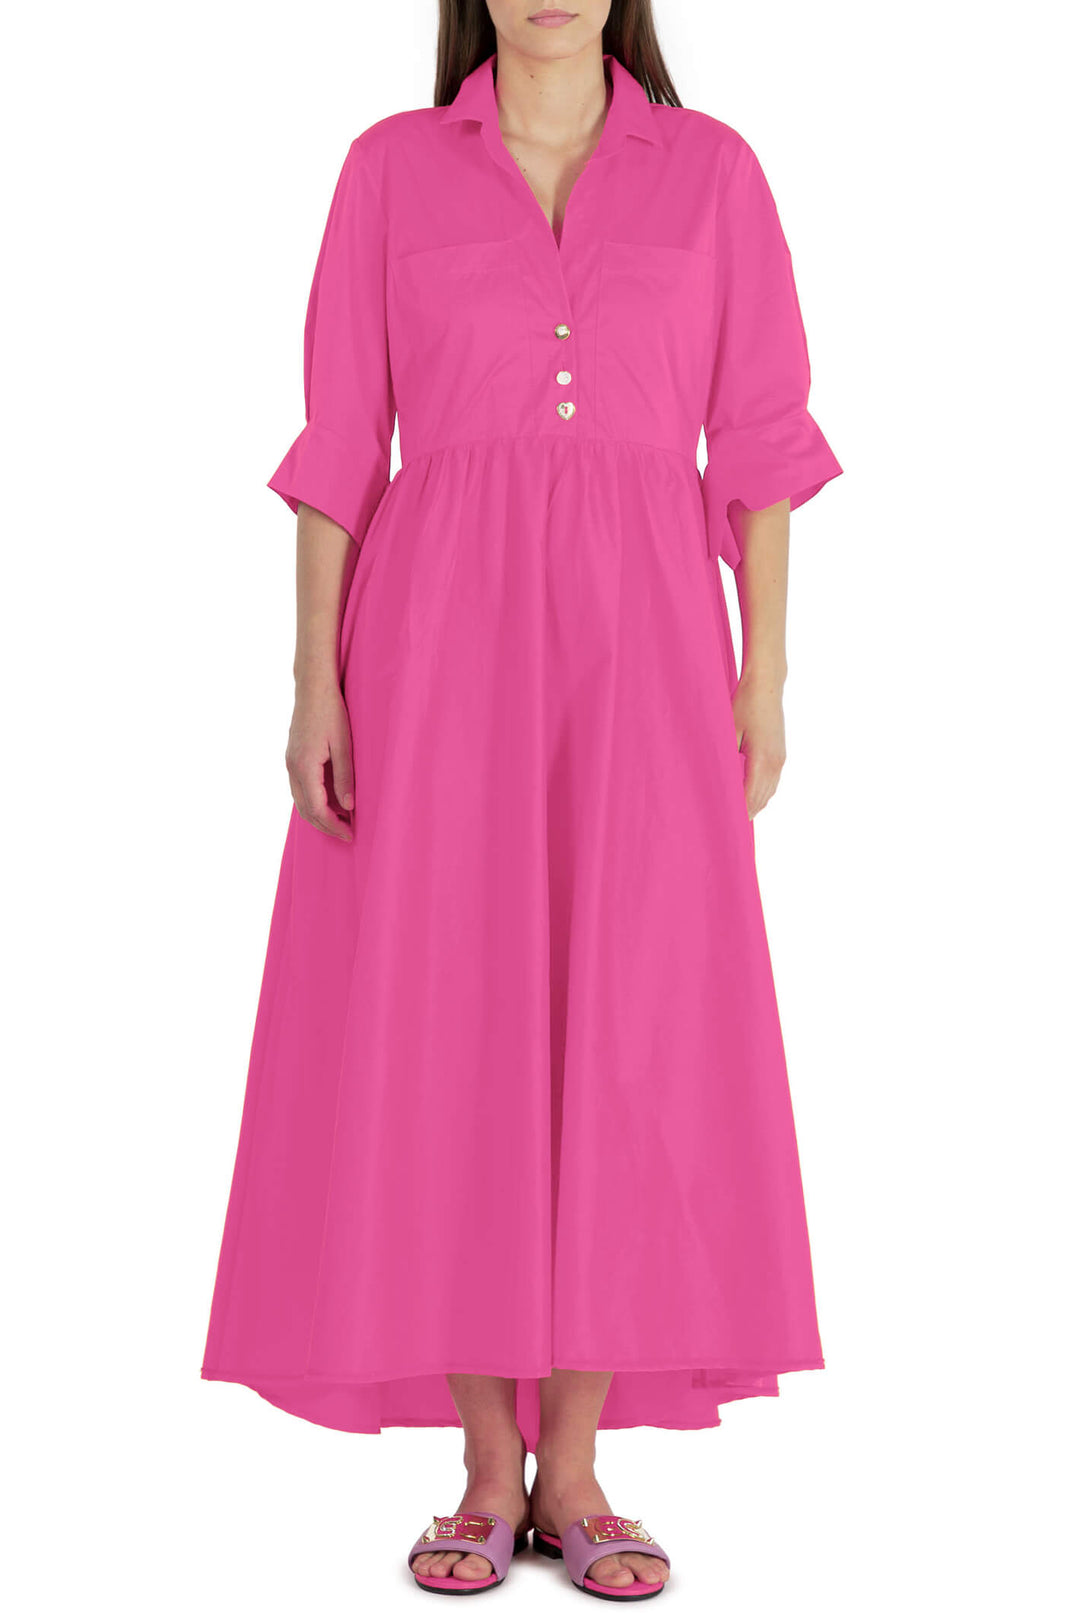 Elisa Cavaletti ELP232021705 Pink Maxi Dress - Experience Boutique